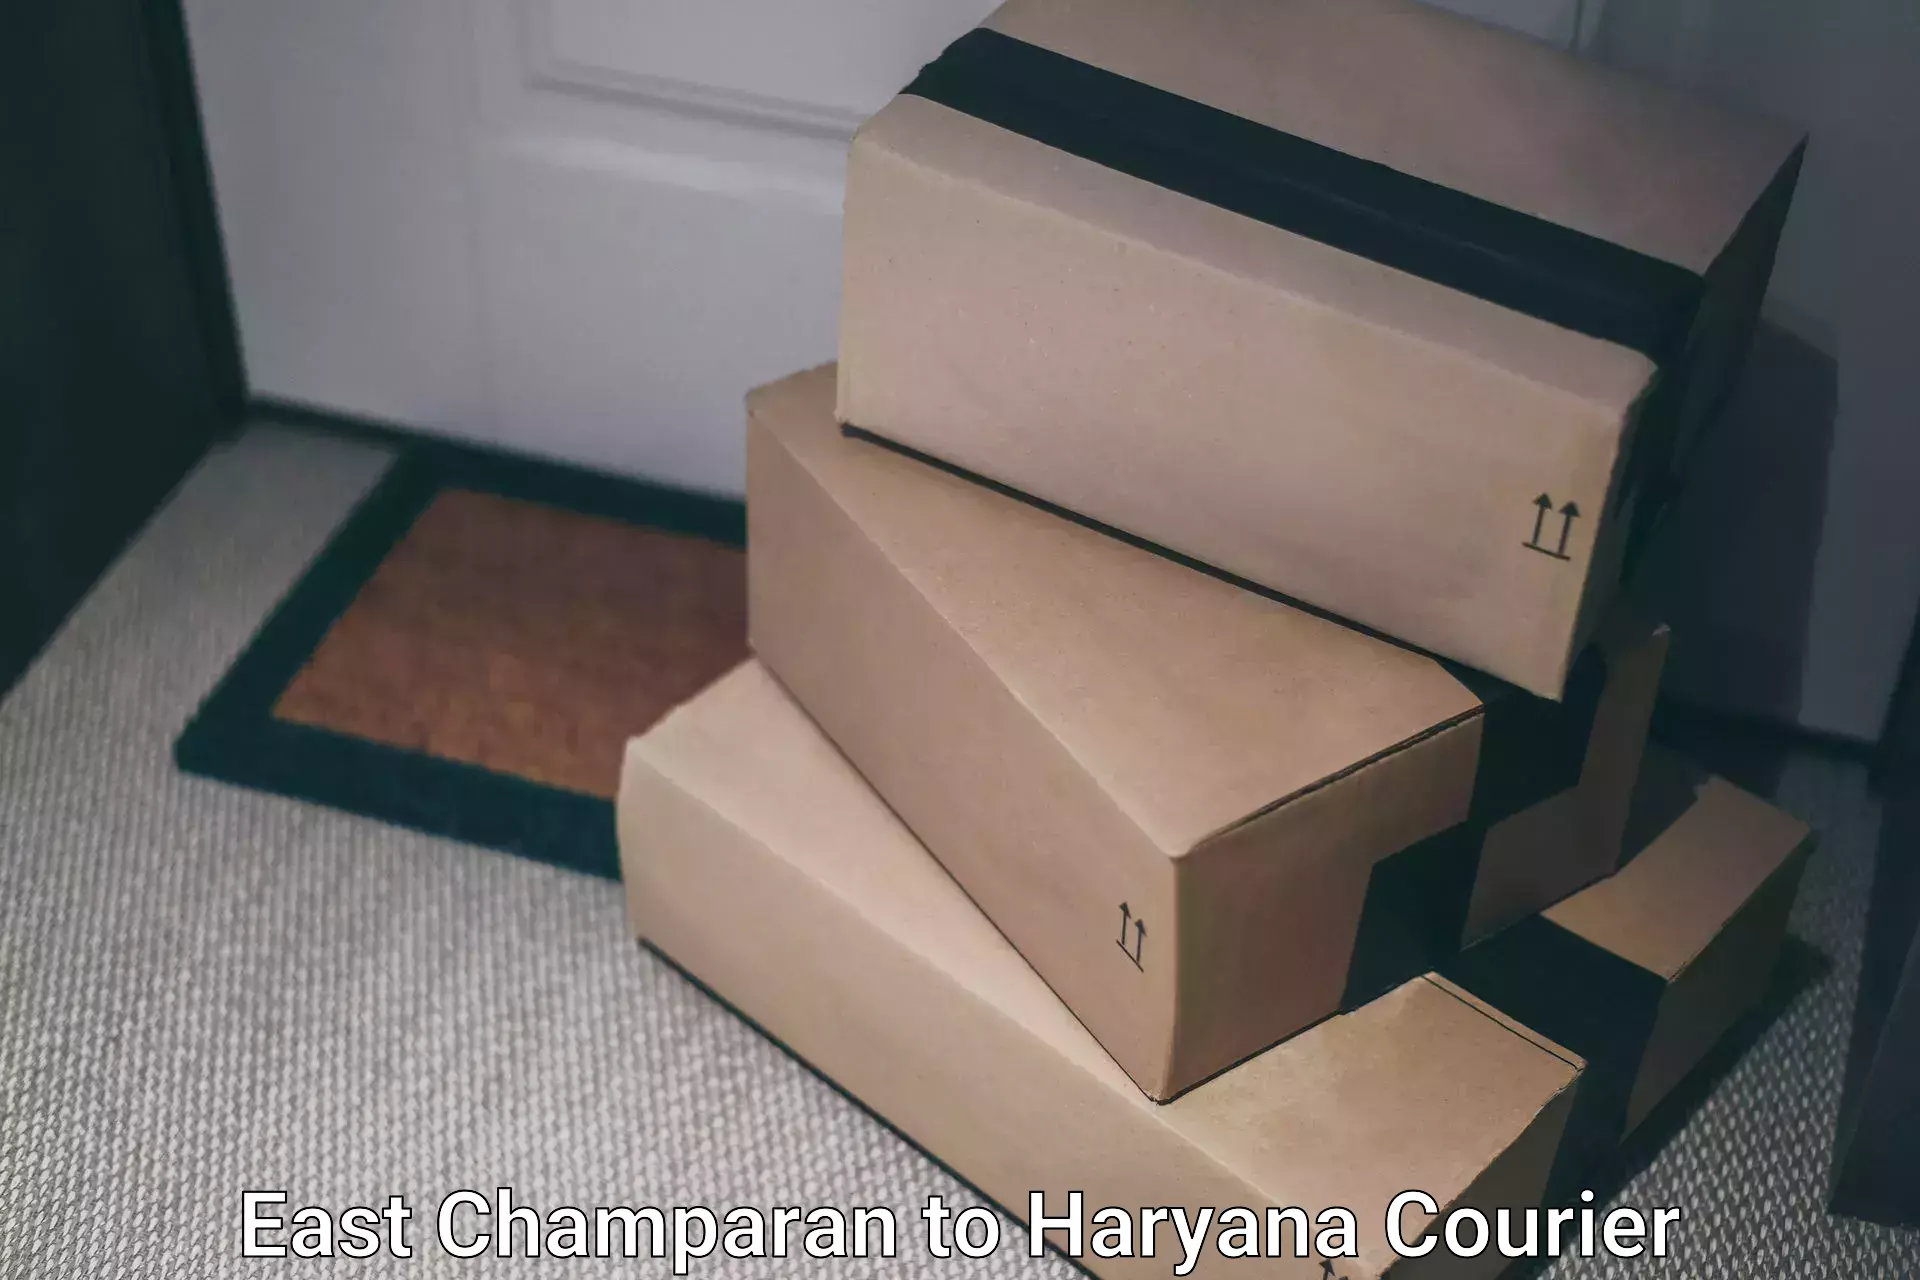 Courier service comparison East Champaran to Gurgaon